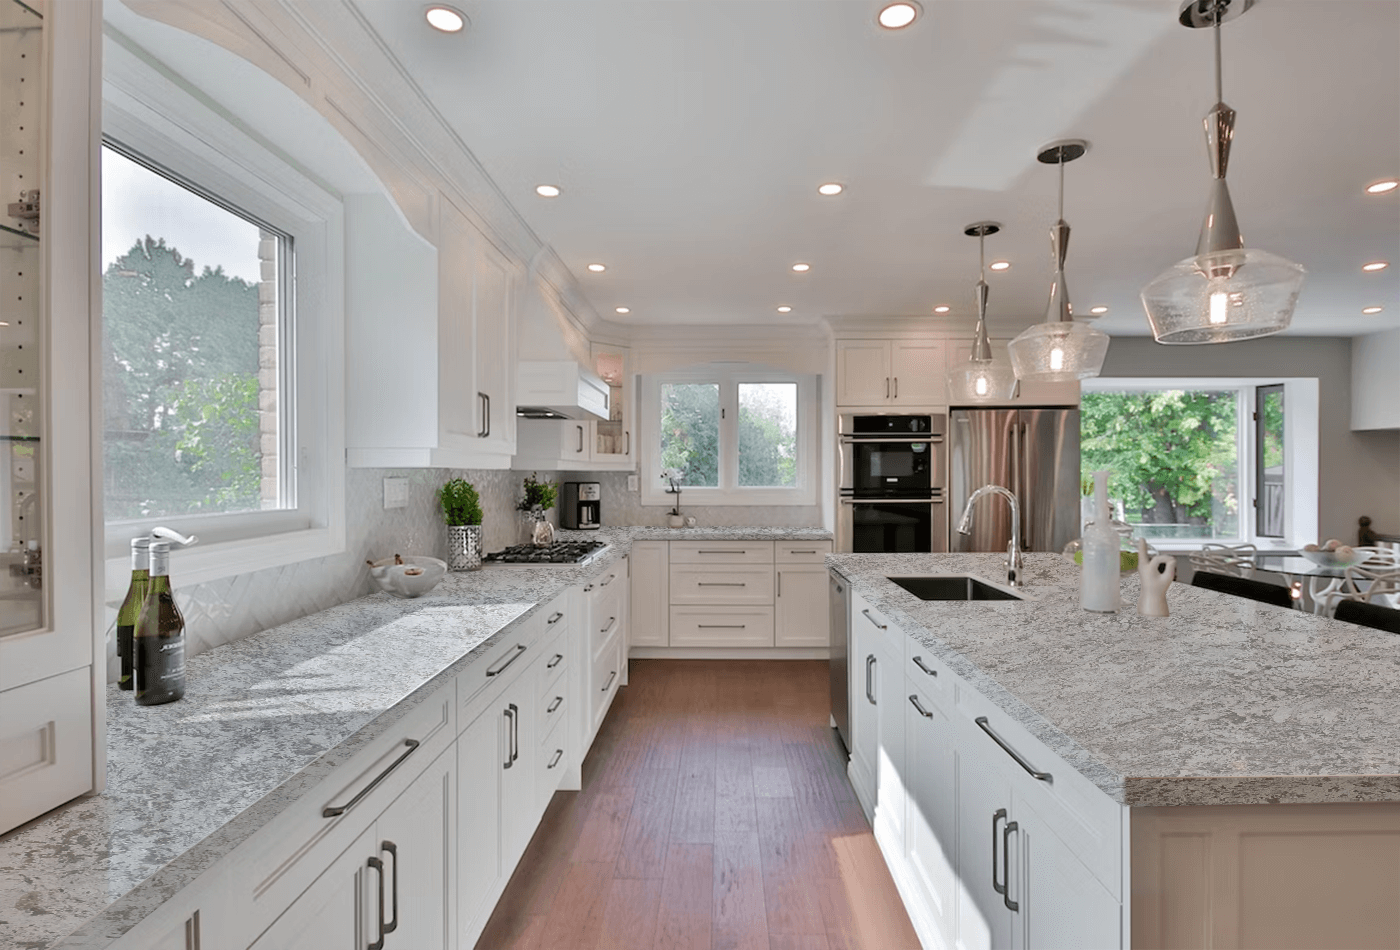 Avean White Granite Covering Kitchen Countertops to Floors